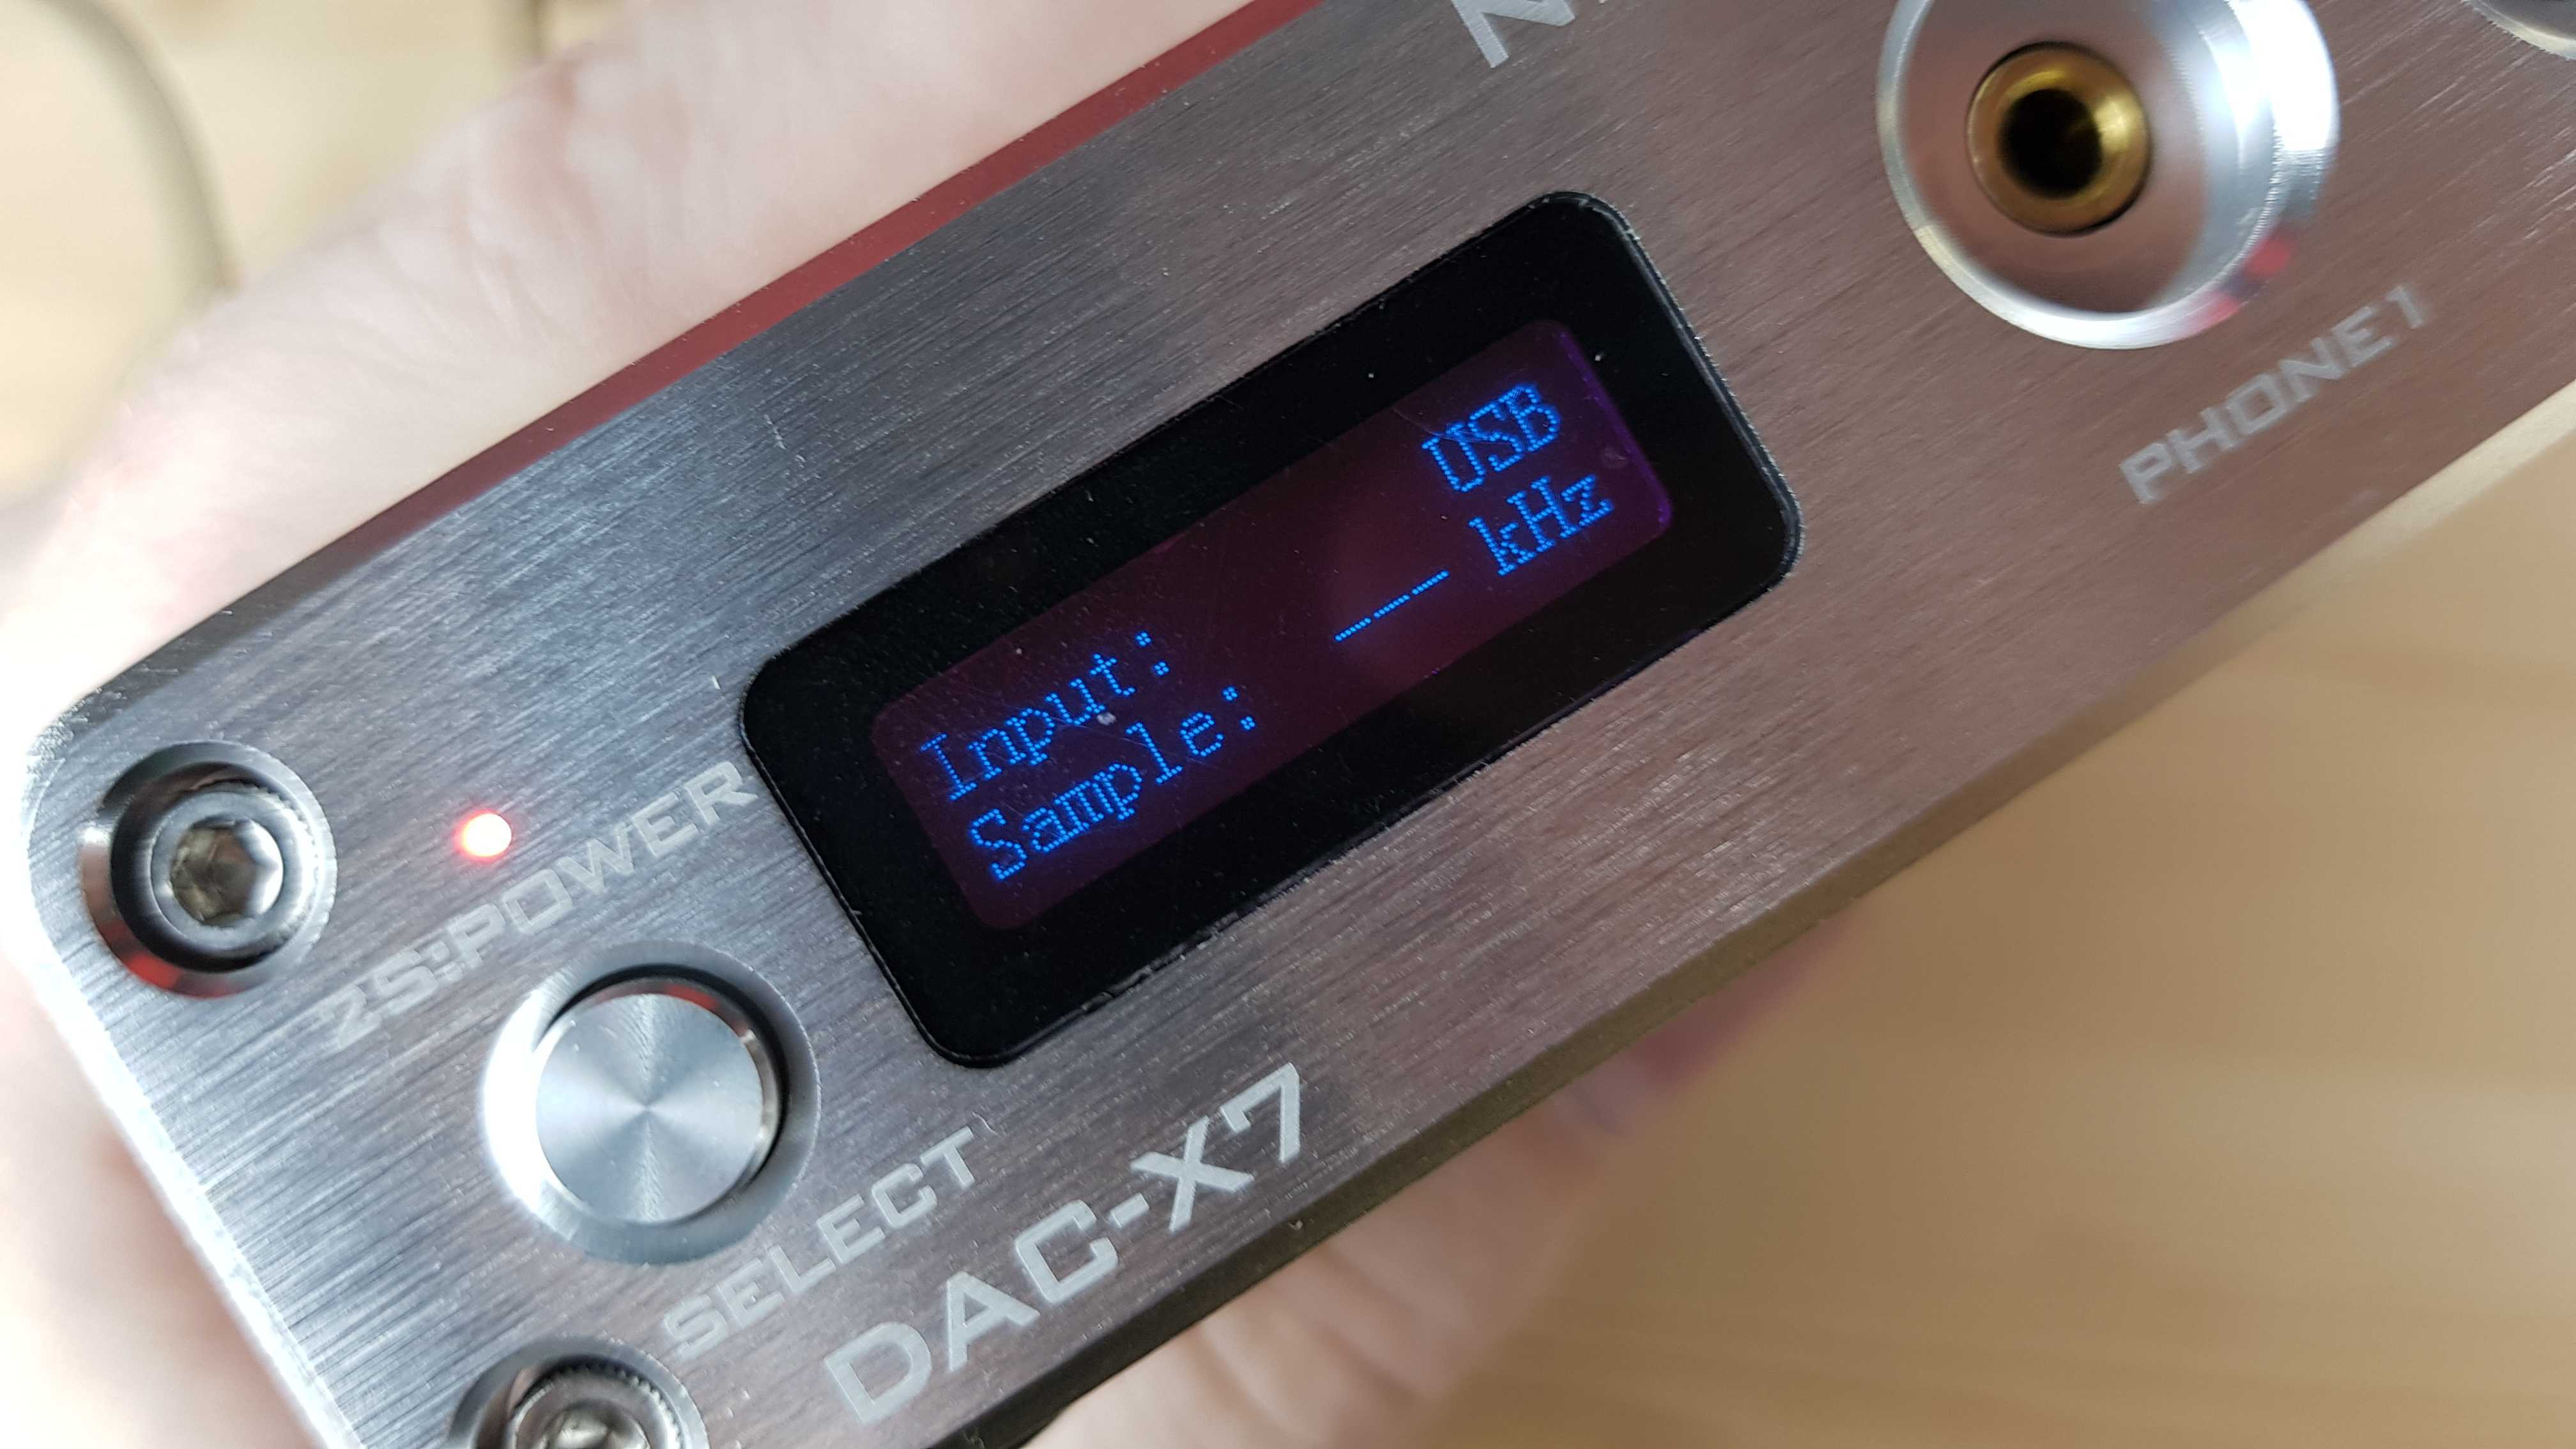 Обзор и отзыв о покупке fx-audio dac-x6 feixiang hifi